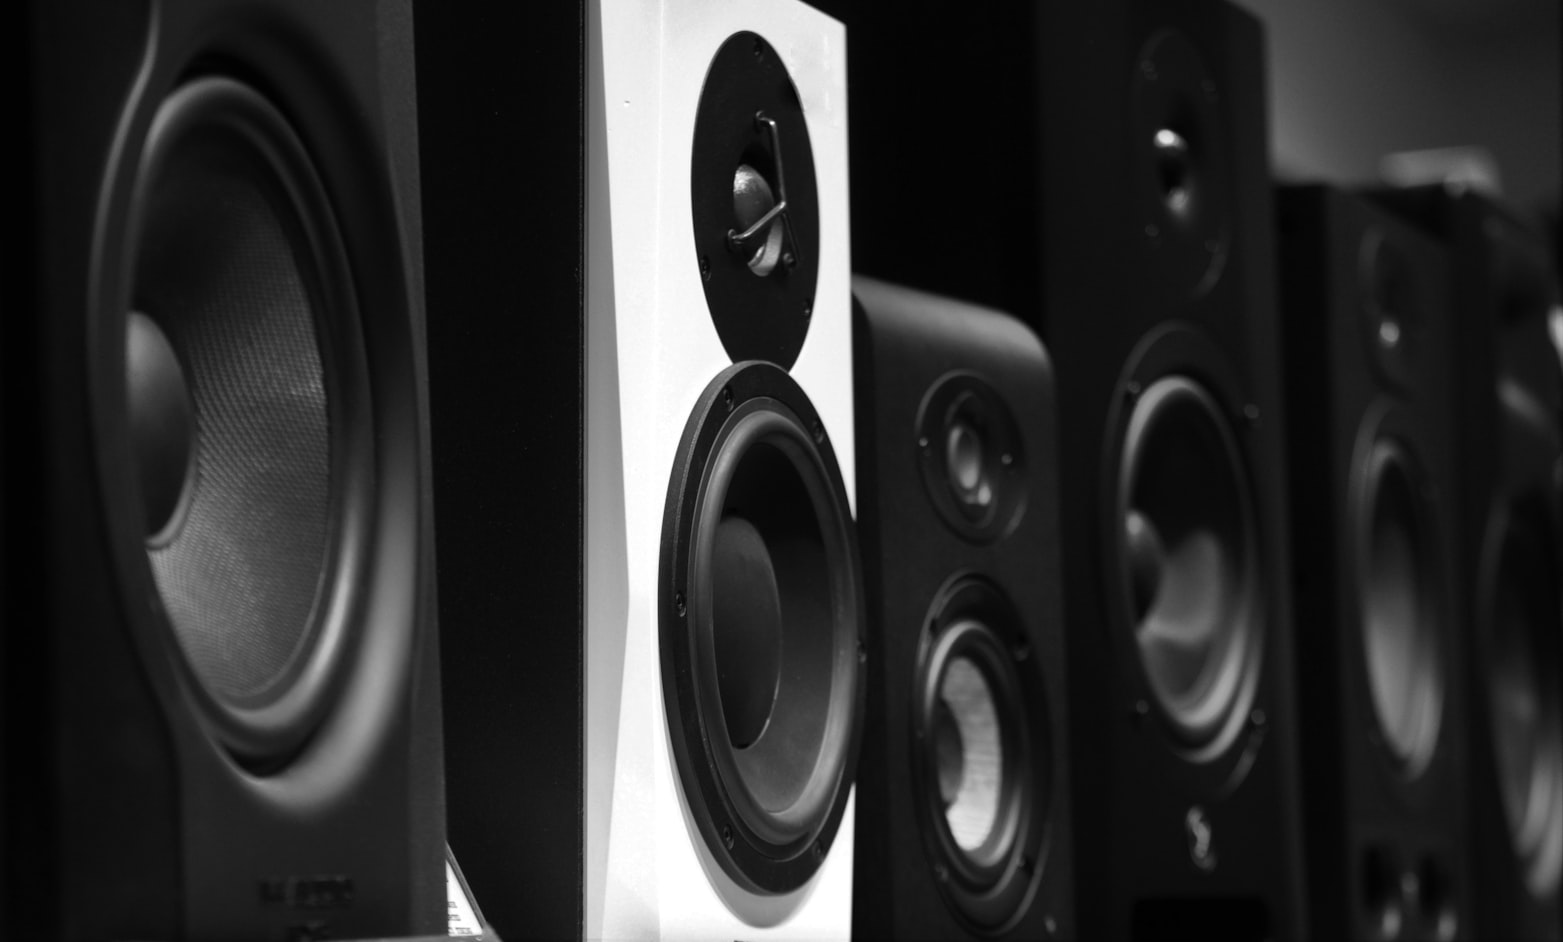 10 Best Marine 6X9 Speakers Based On Customer Ratings